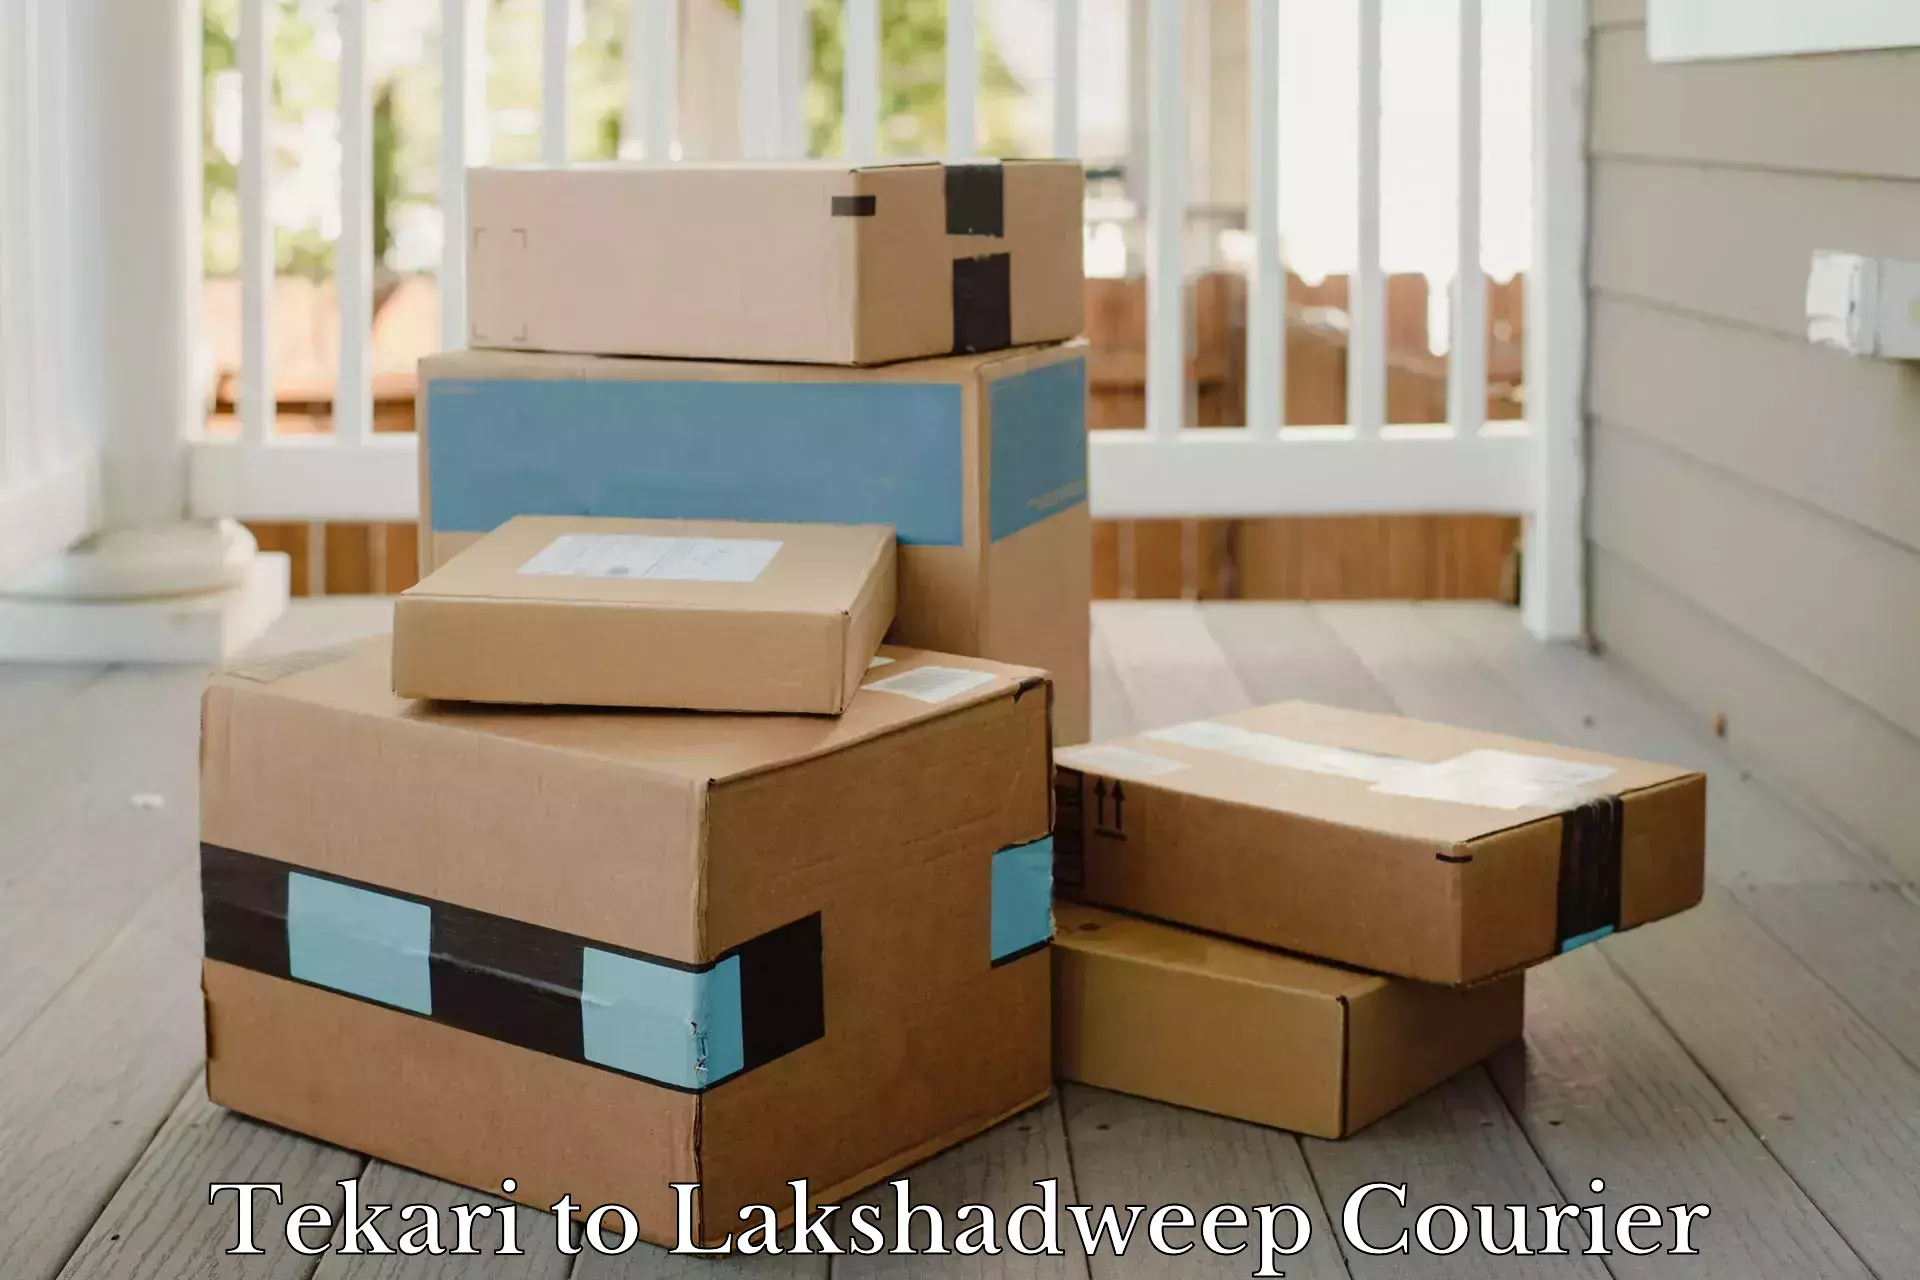 Full-service courier options Tekari to Lakshadweep